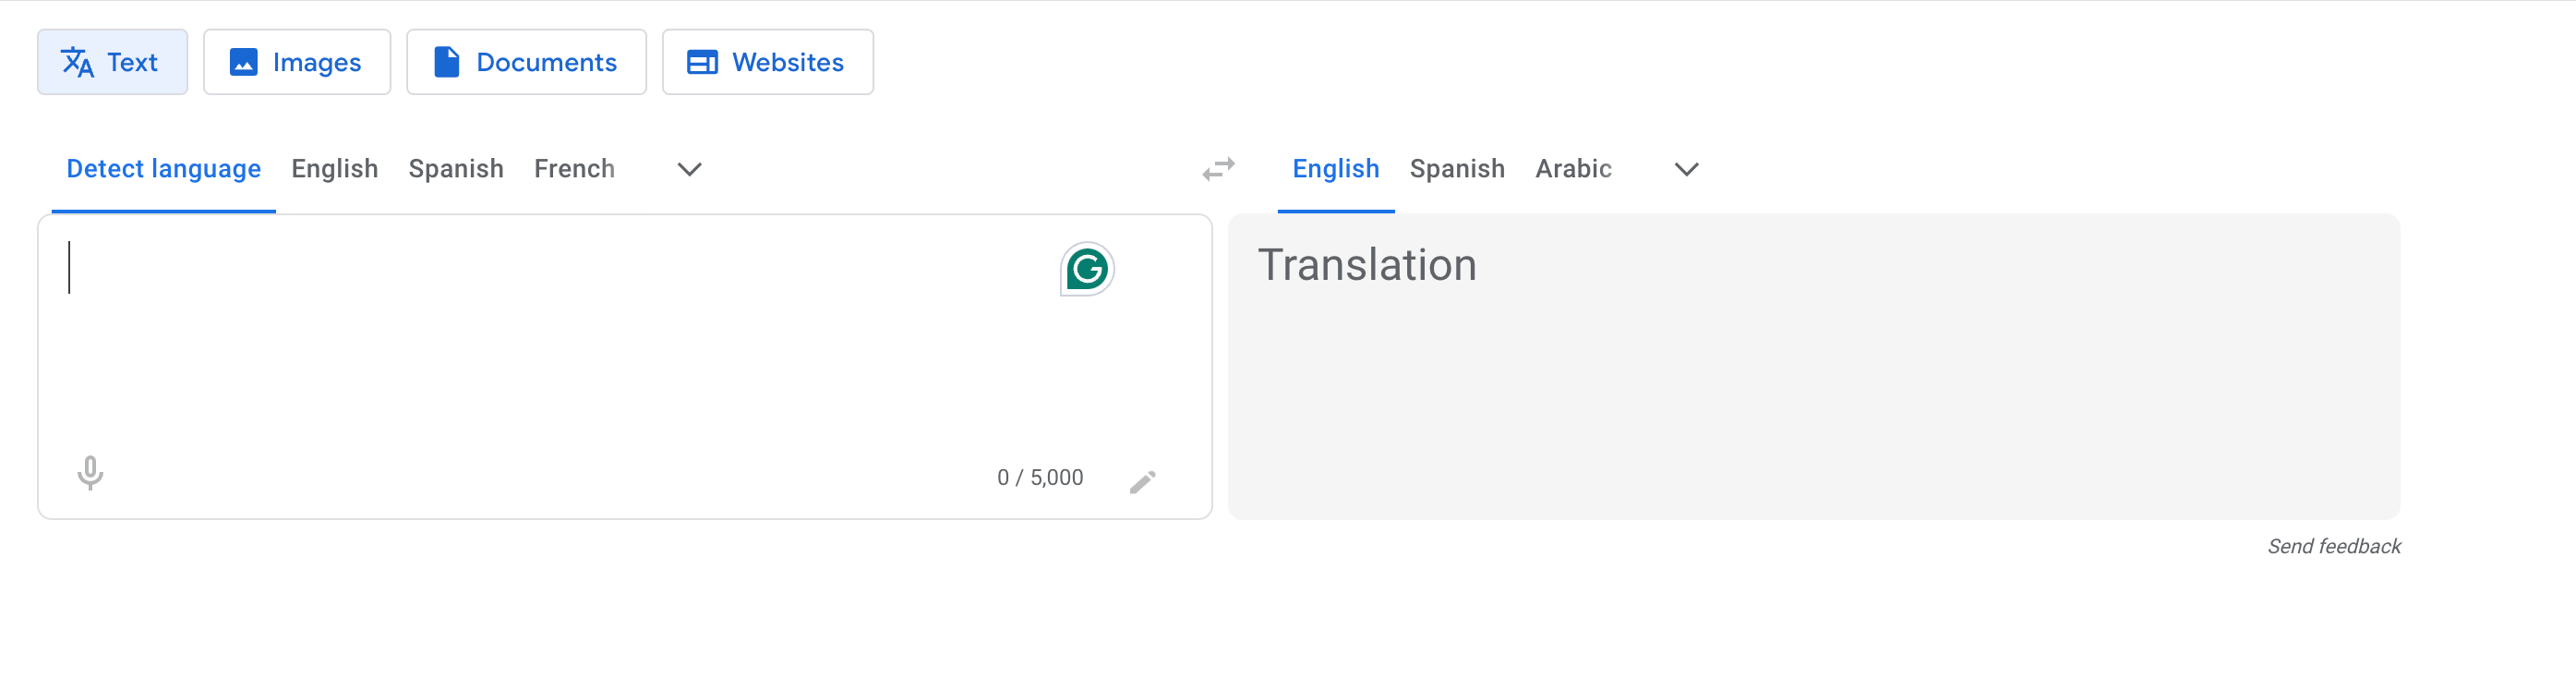 Google Translate Interface